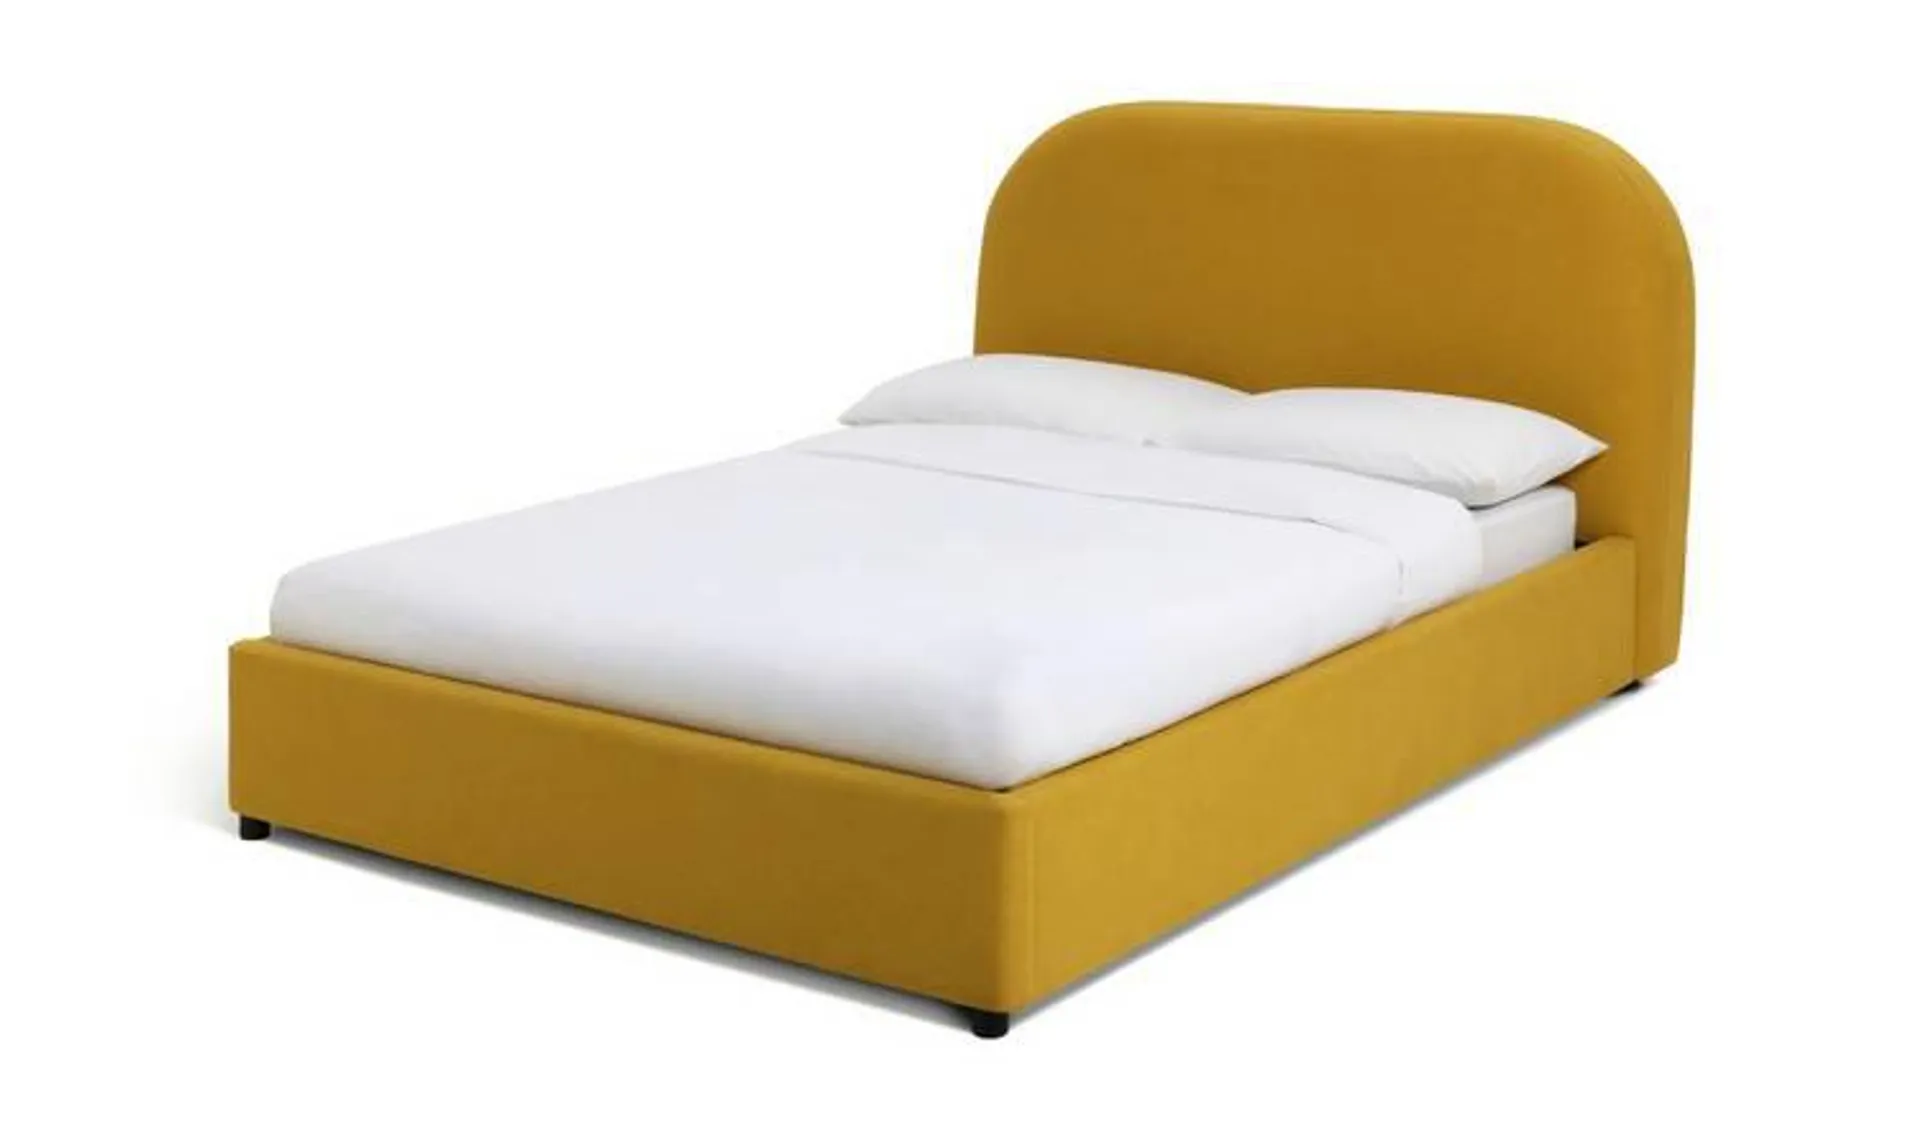 Habitat Layla Double Ottoman Bed Frame - Yellow